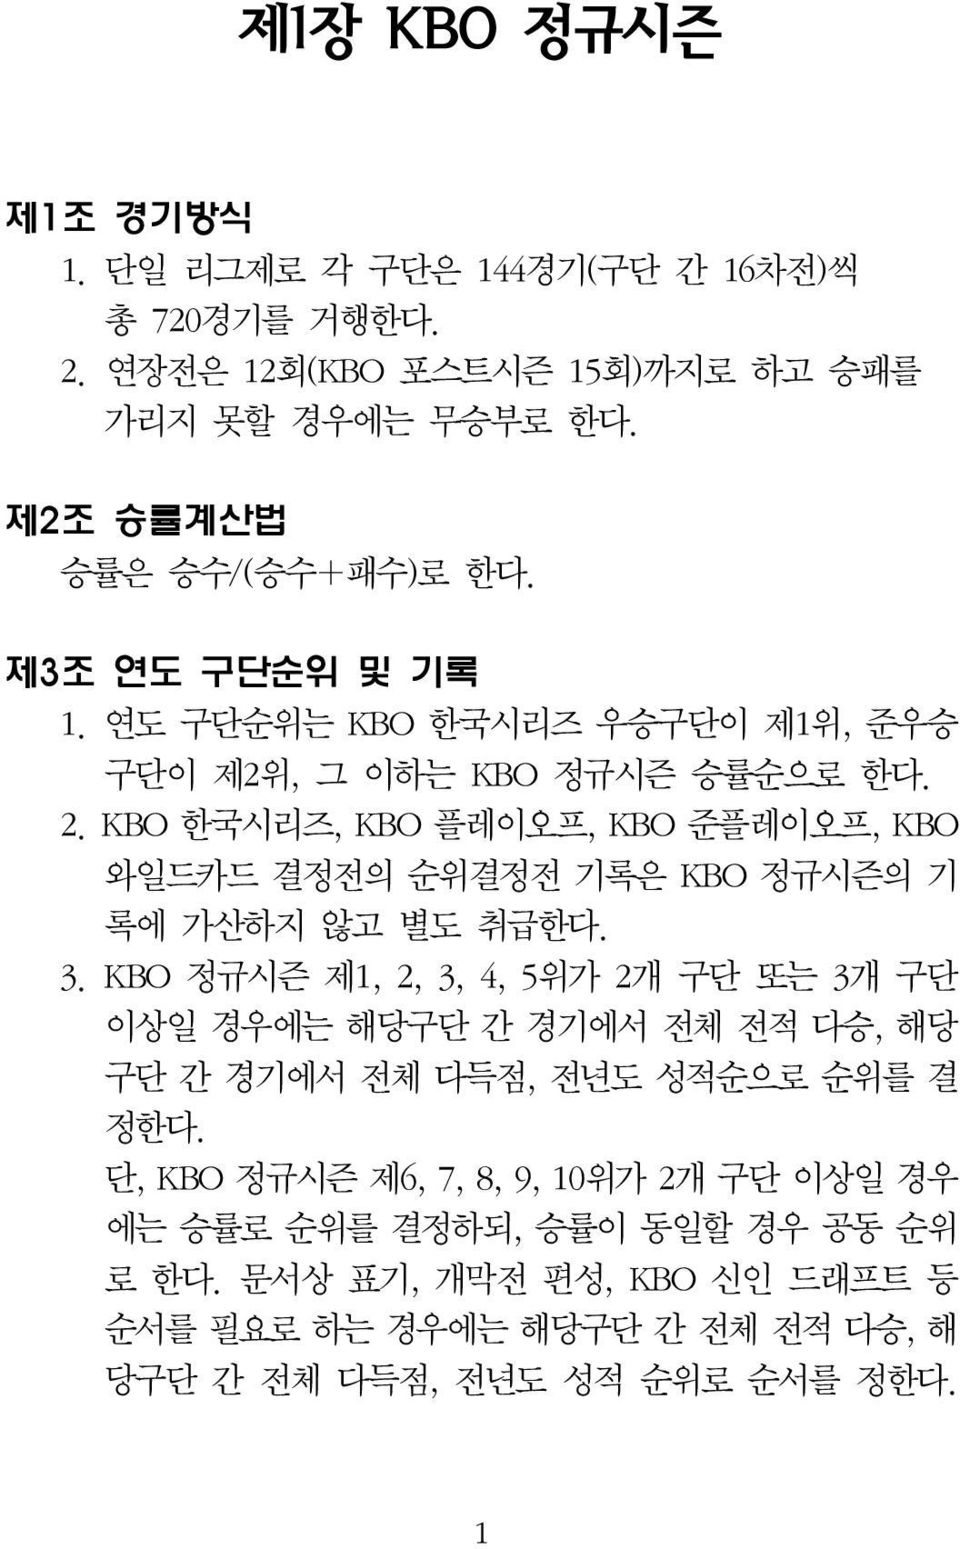 KBO 한국시리즈, KBO 플레이오프, KBO 준플레이오프, KBO 와일드카드 결정전의 순위결정전 기록은 KBO 정규시즌의 기 록에 가산하지 않고 별도 취급한다. 3.